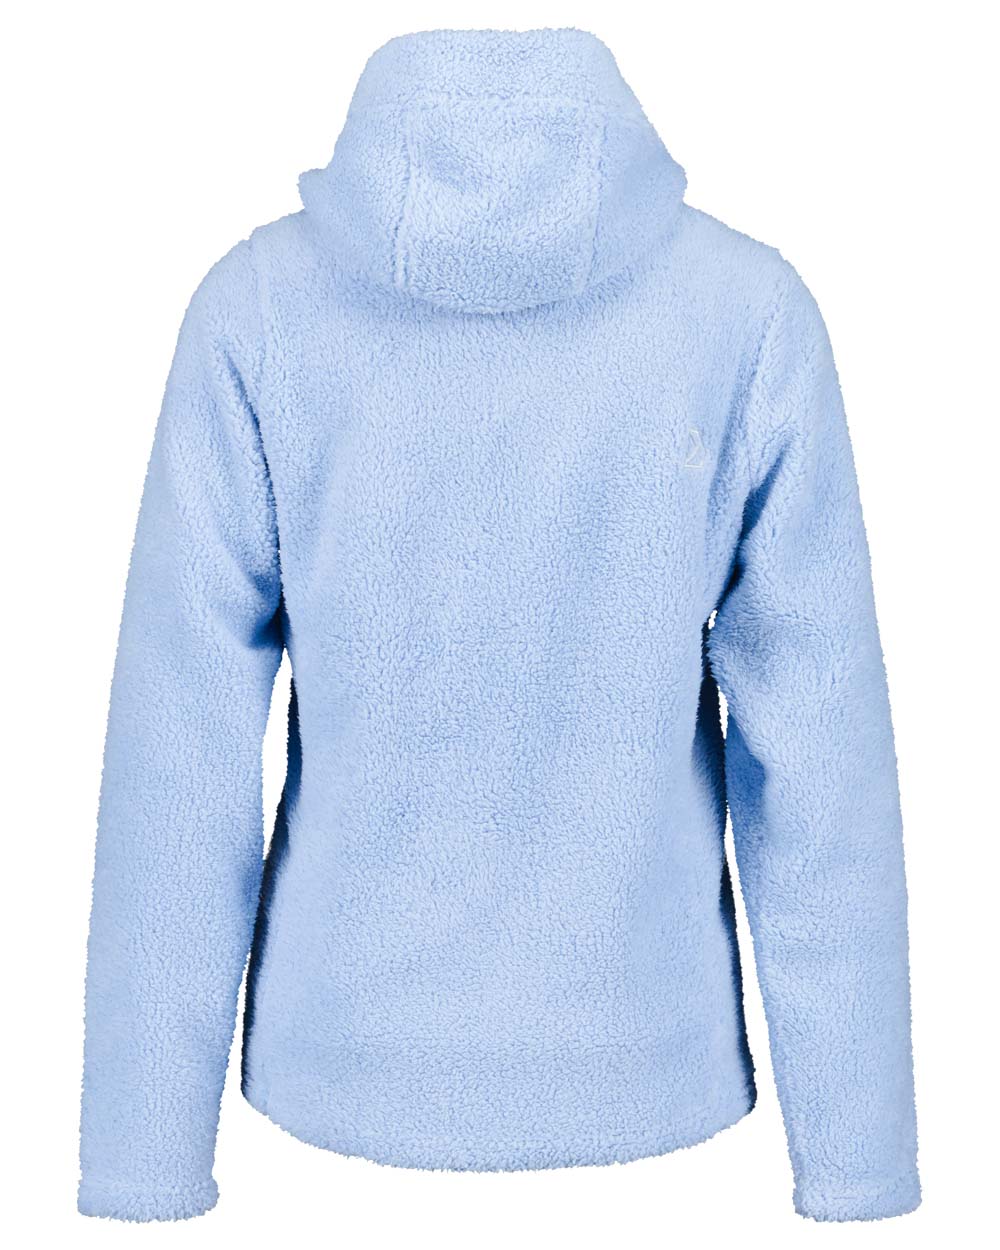 Sea Blue coloured Didriksons Anniken Womens Full Zip Fleece on White background 